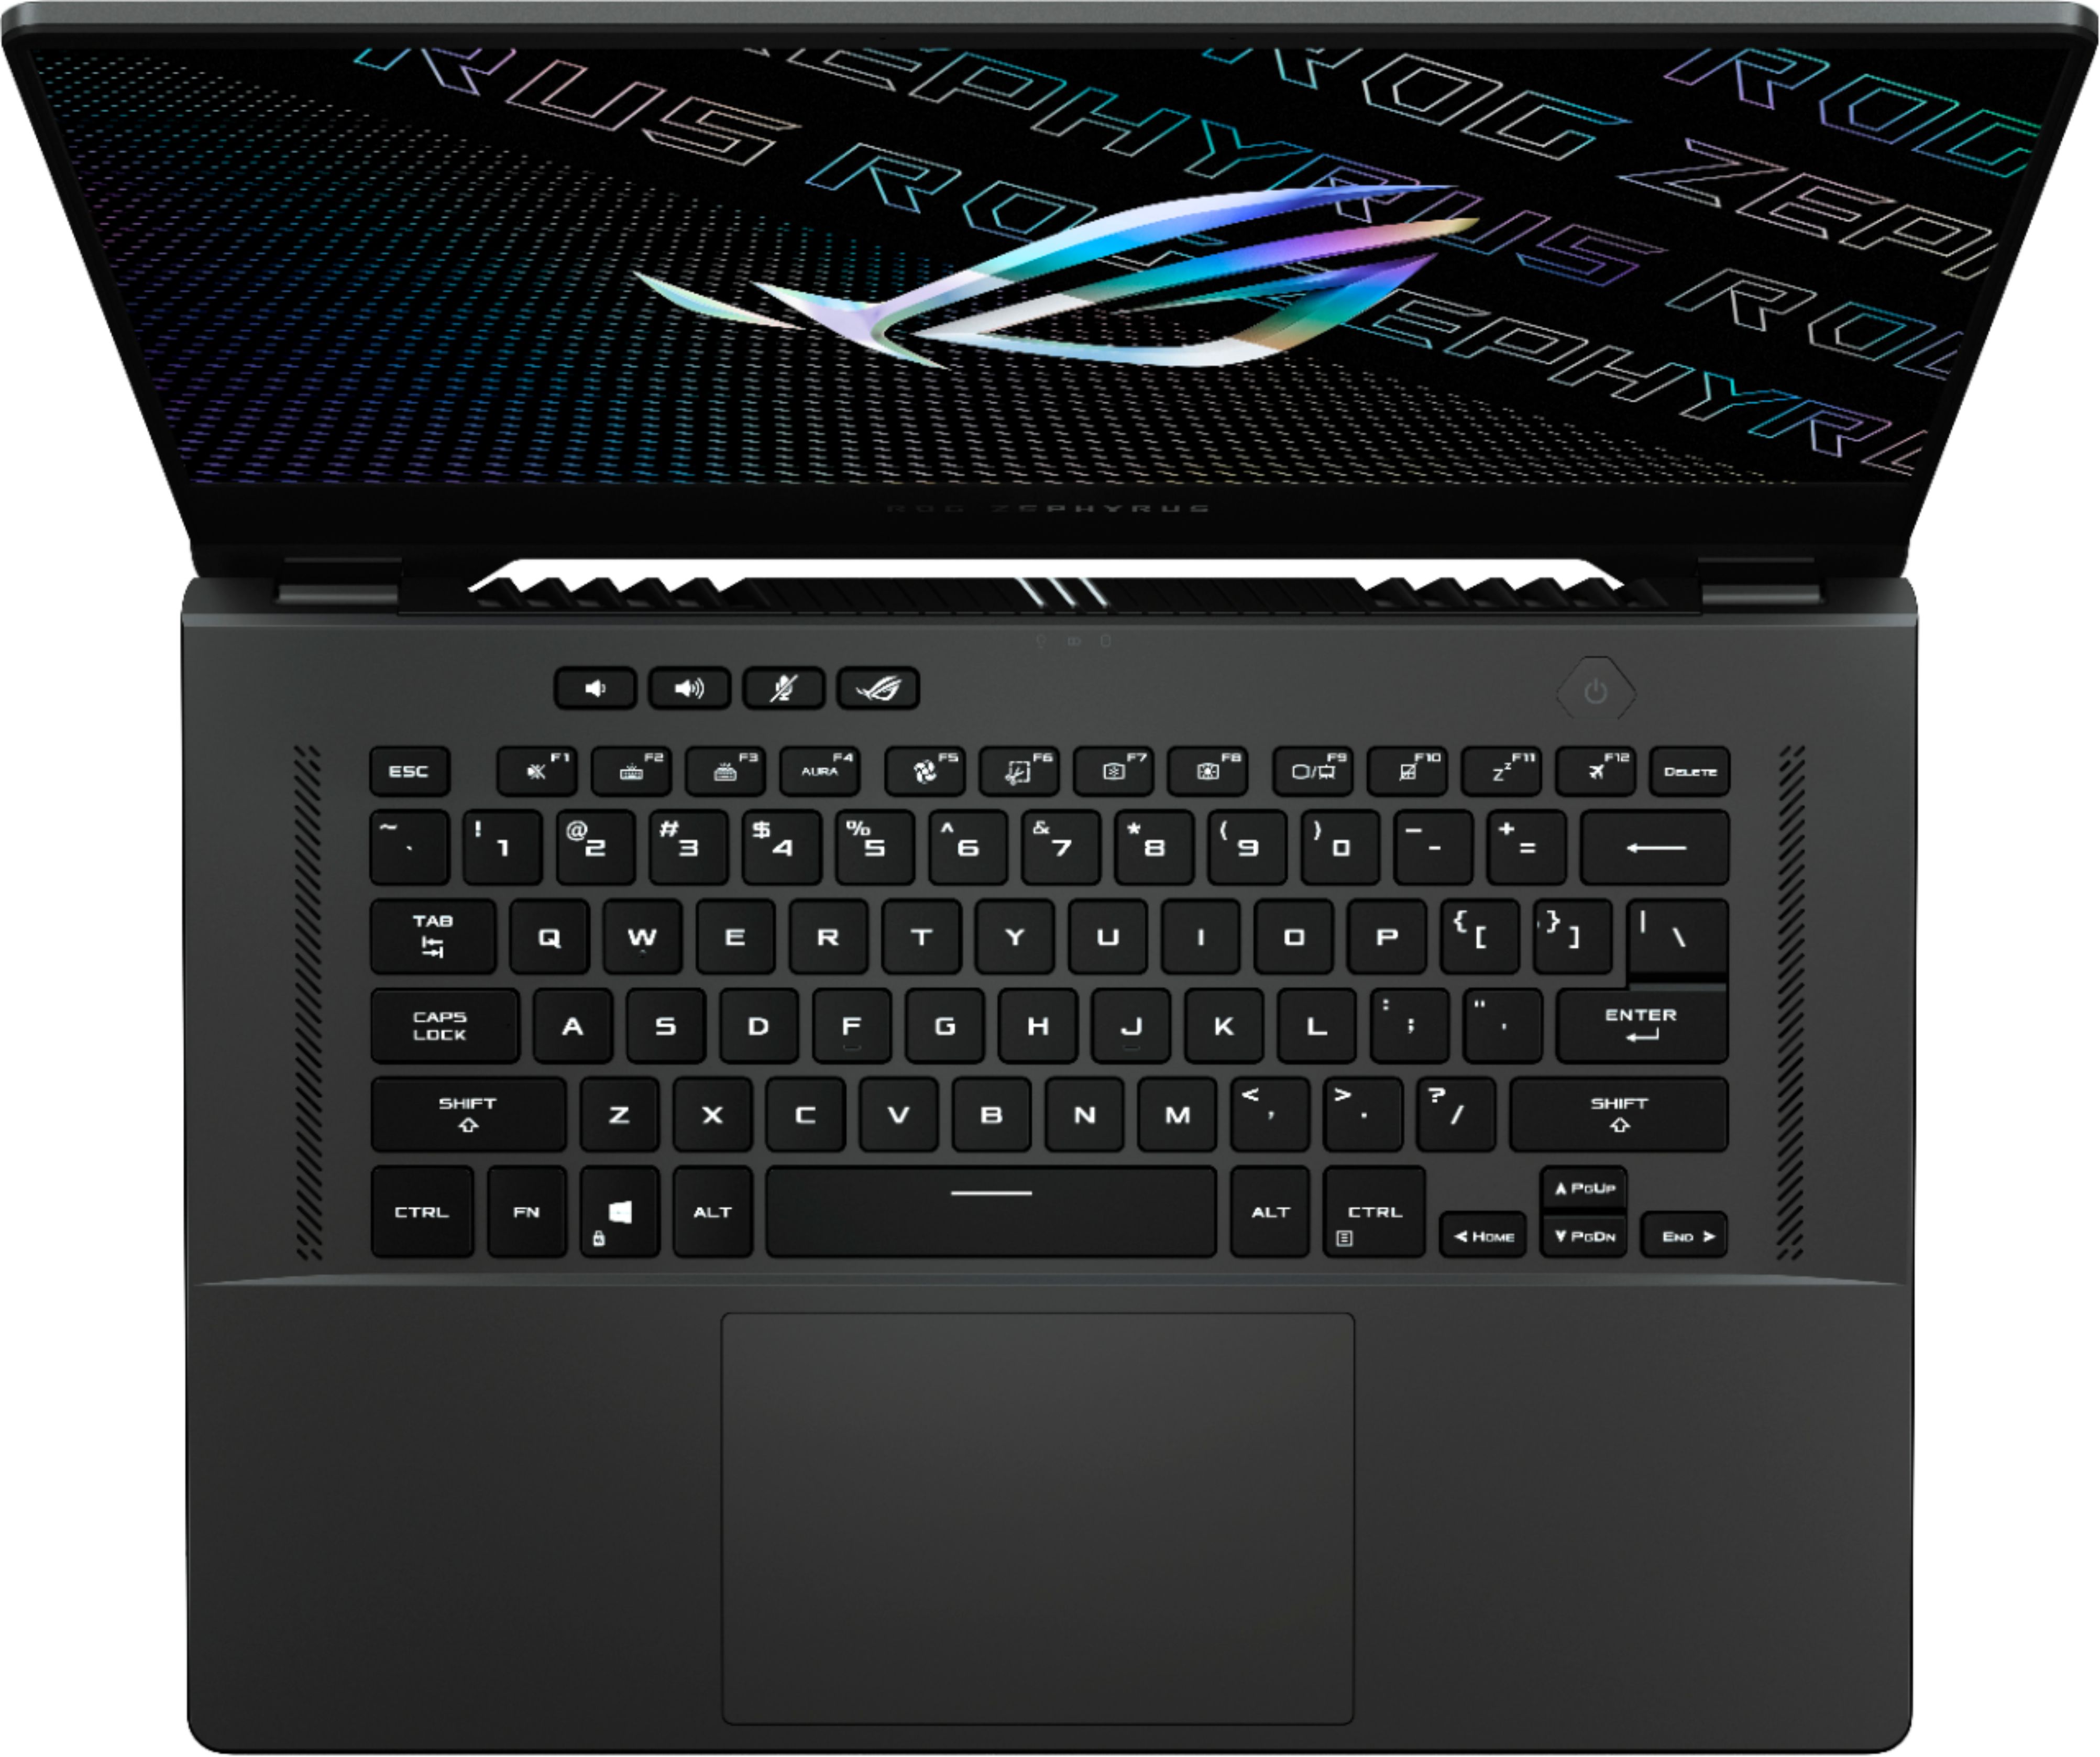 ASUS ROG Zephyrus 15.6" QHD Gaming Laptop AMD Ryzen 9 16GB Memory